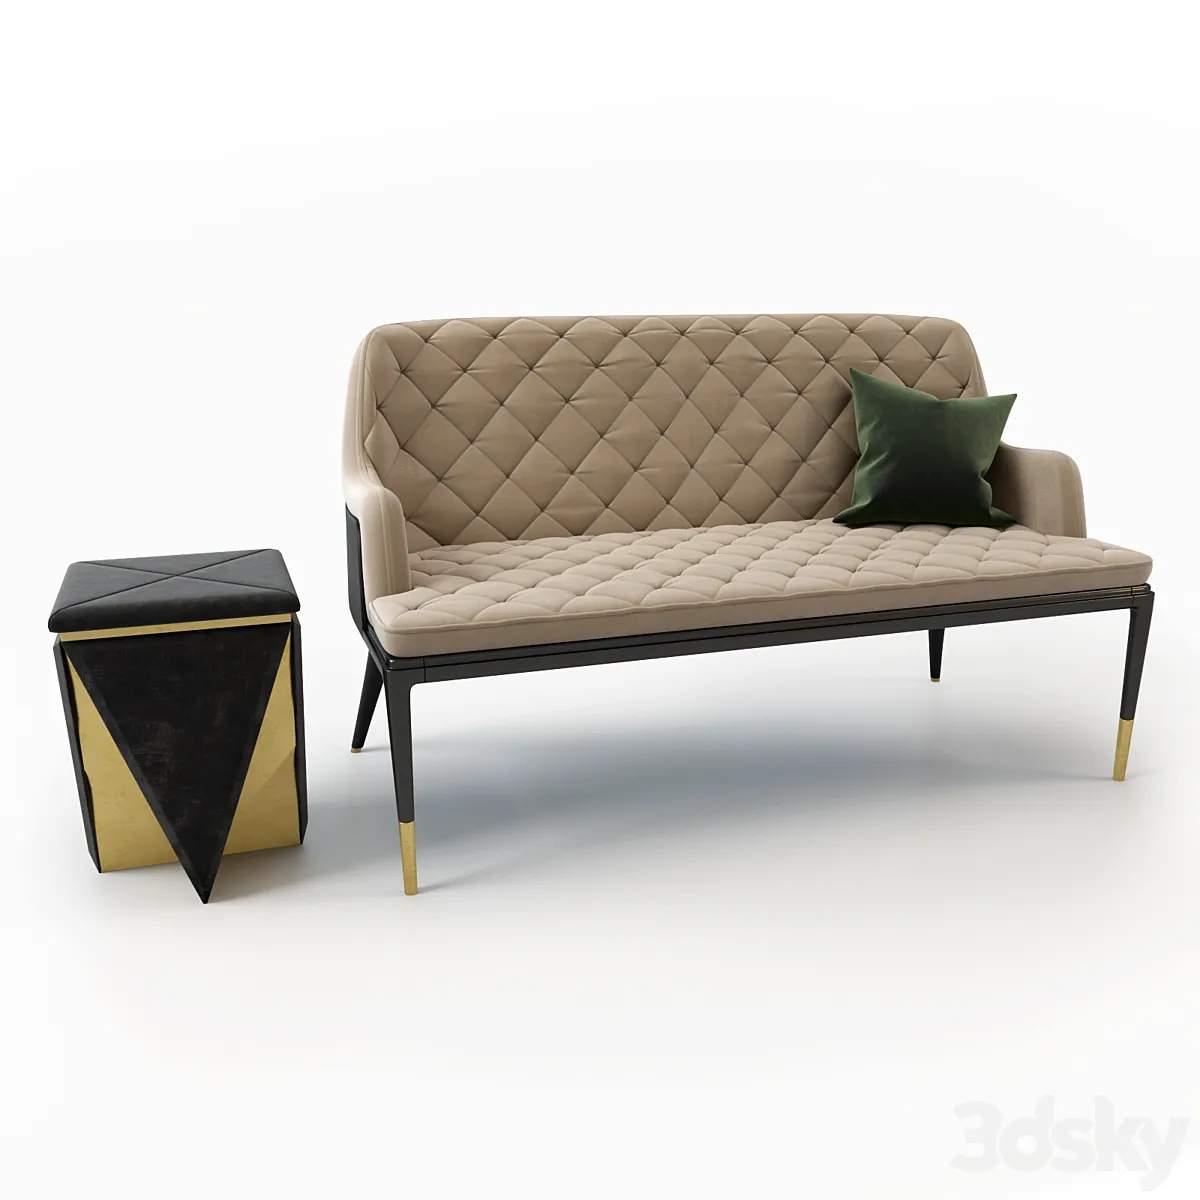 3dsky - Charla two seat sofa